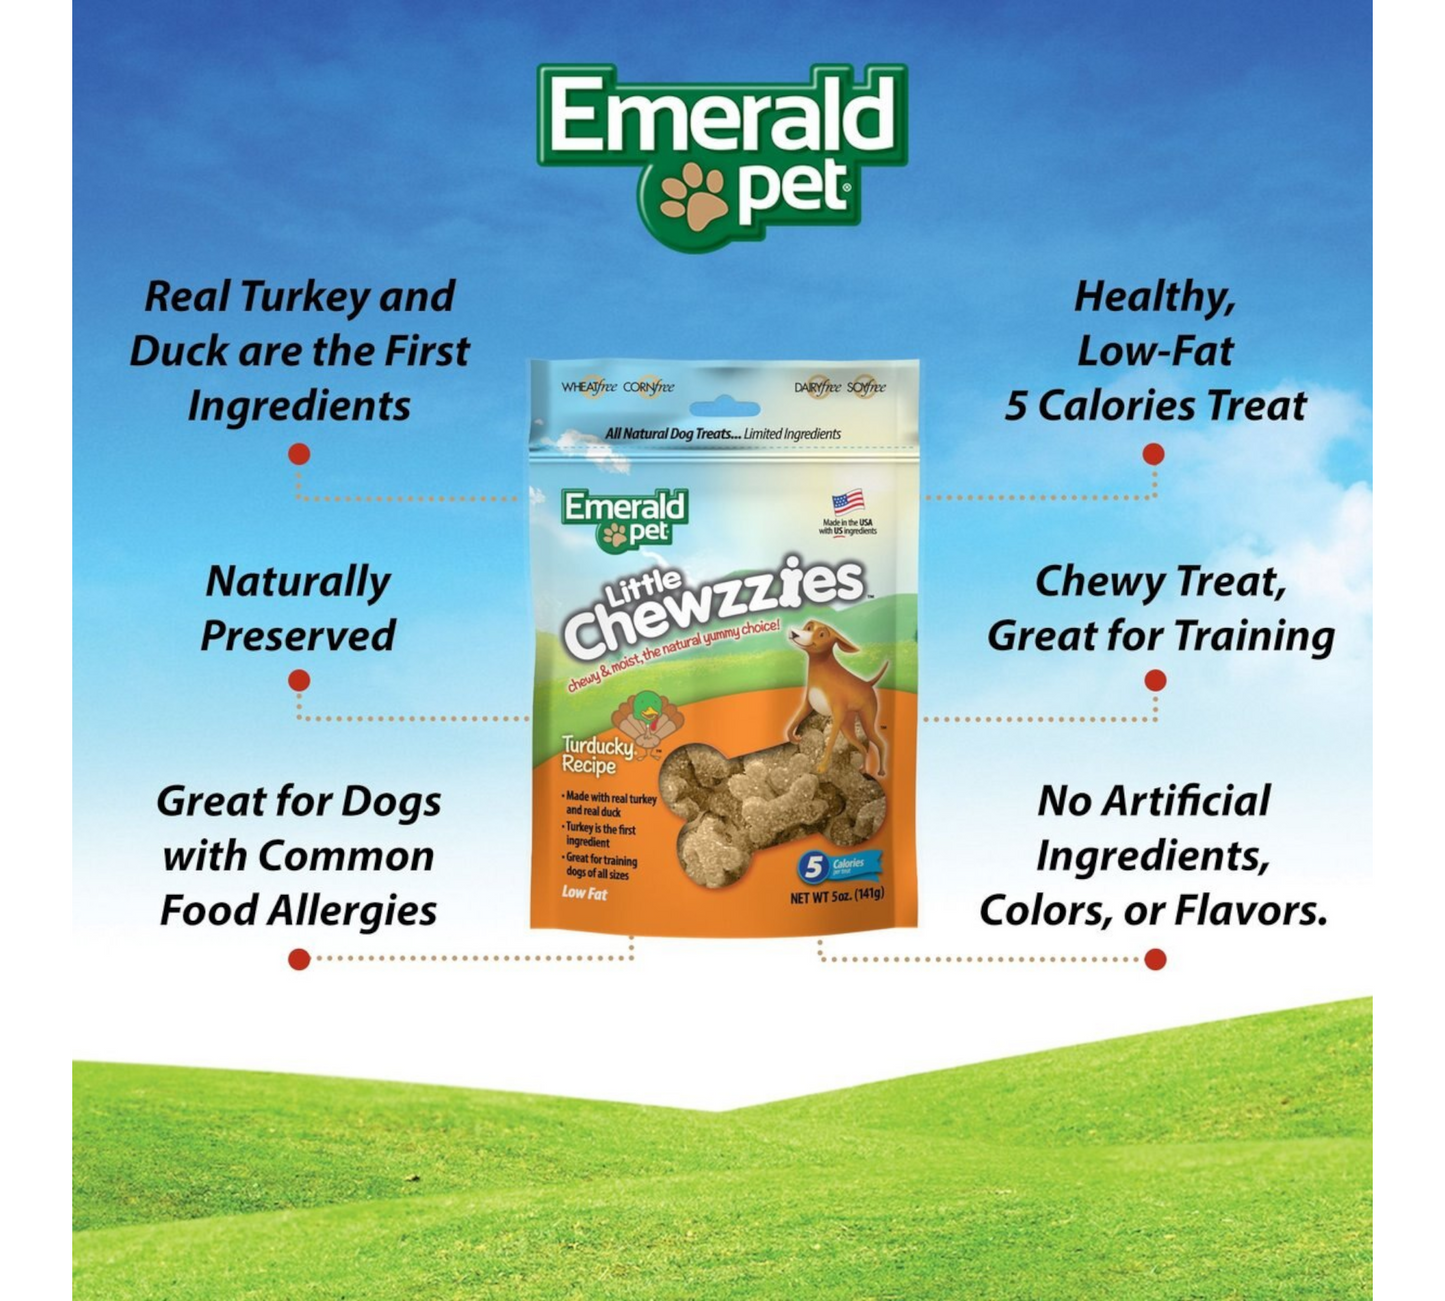 Emerald Pet Little Chewzzies Soft Training Treats Turducky Recipe,